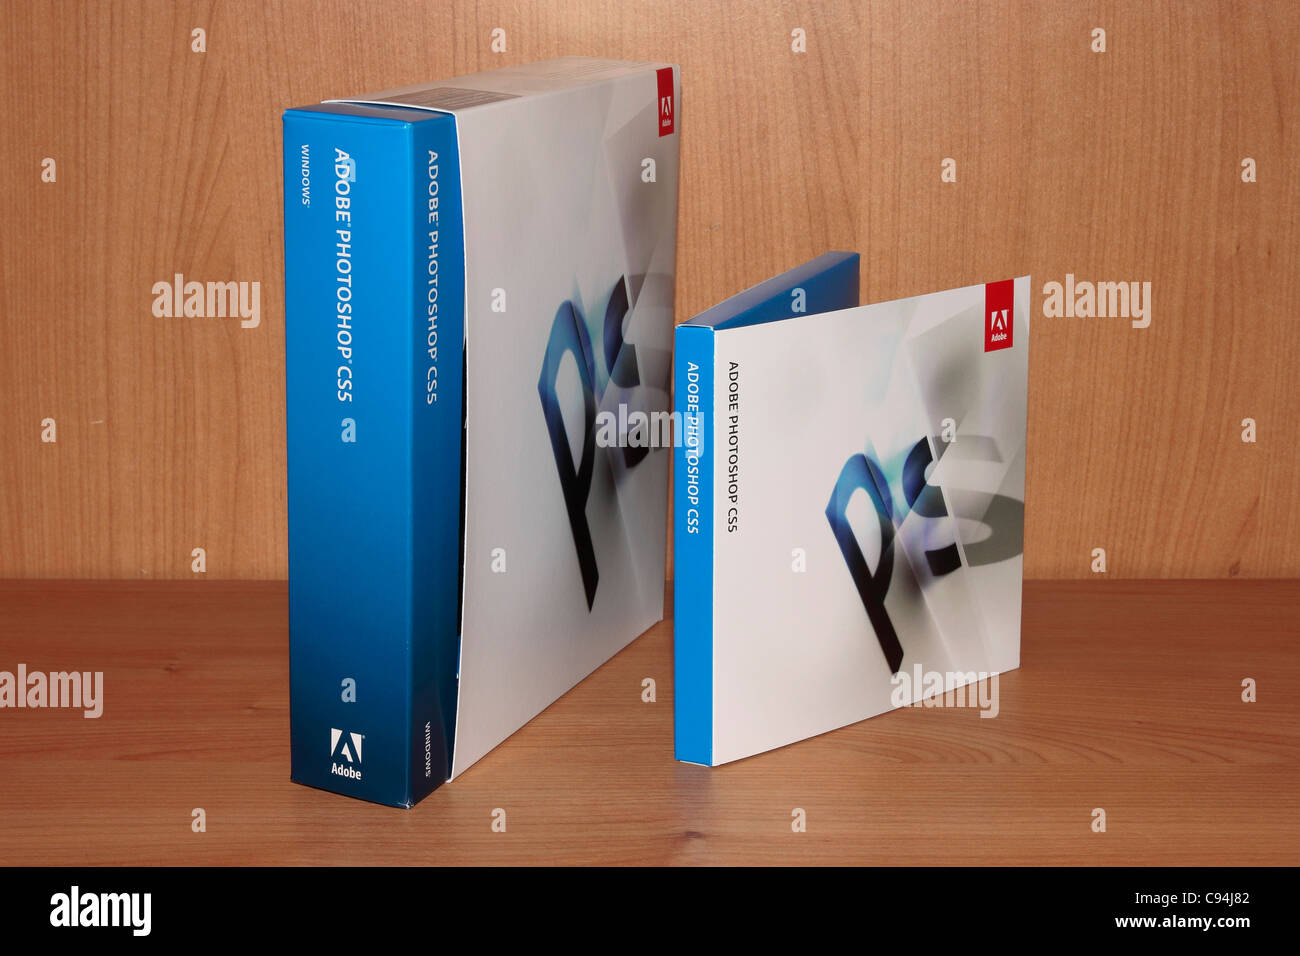 Adobe Photoshop CS5 Box Fotografía de stock - Alamy